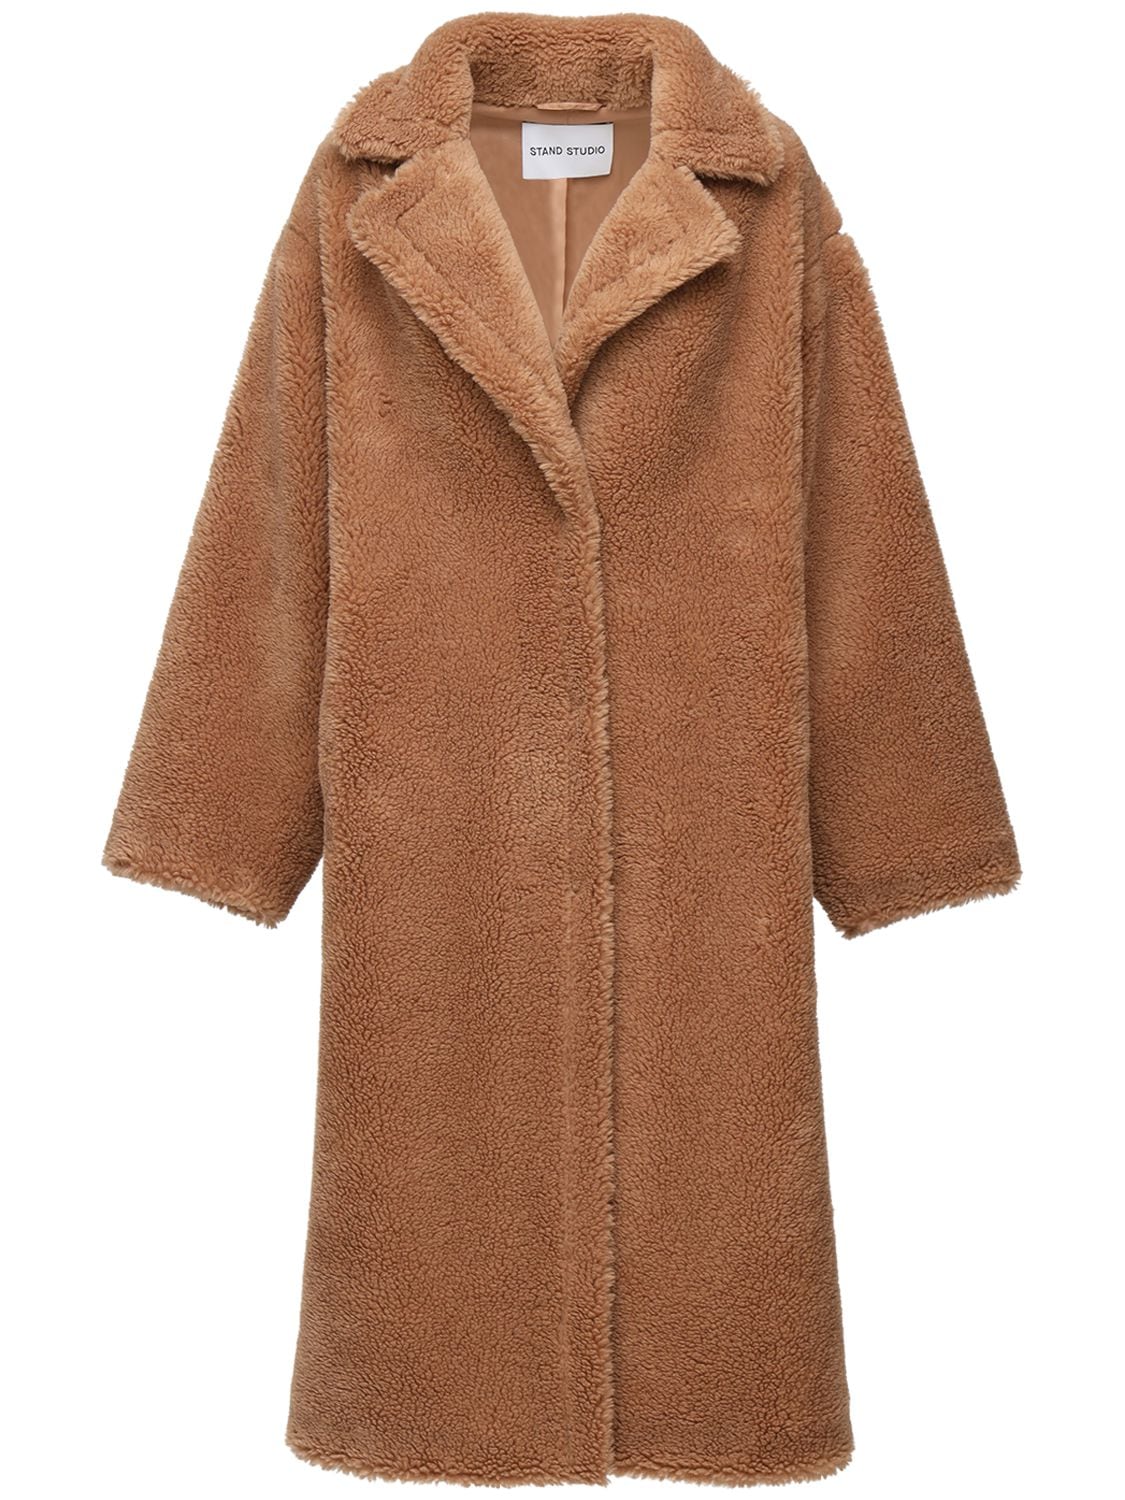 Maria Long Faux Teddy Coat